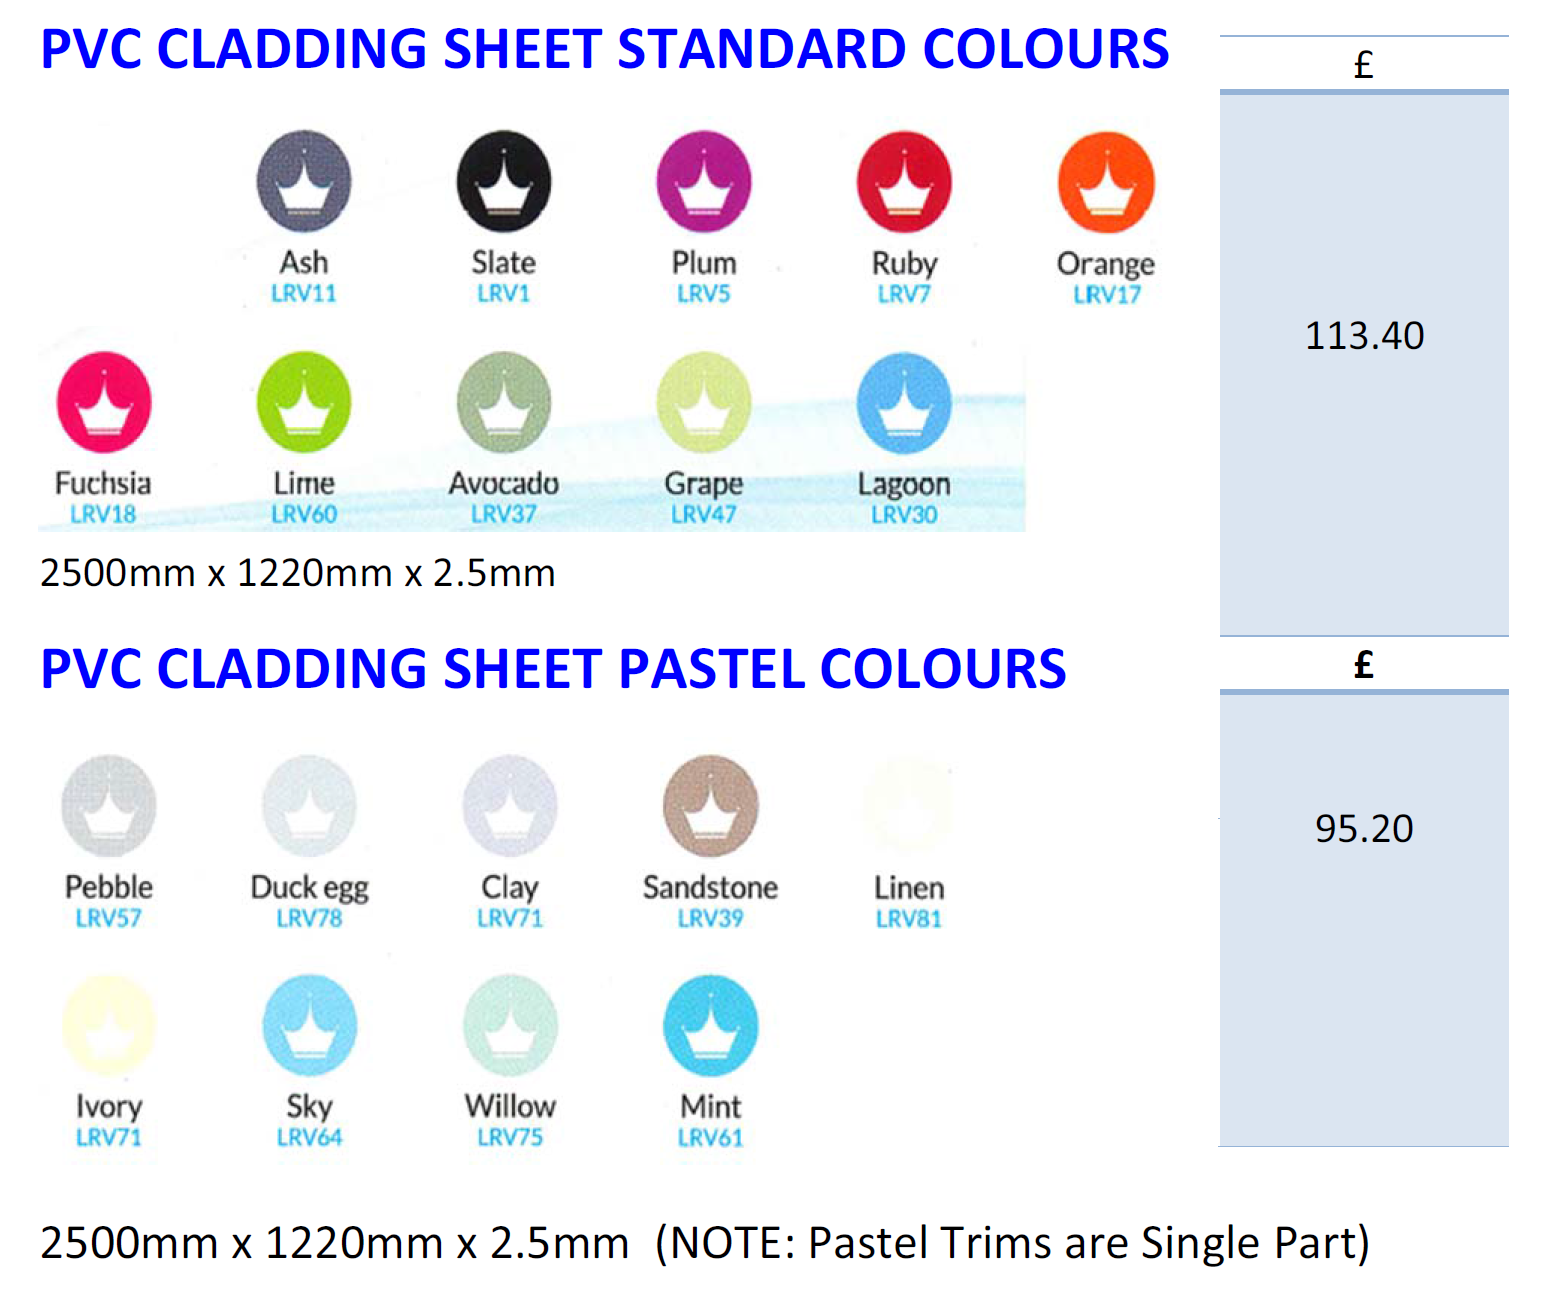 PVC Cladding Sheet Standard Colours